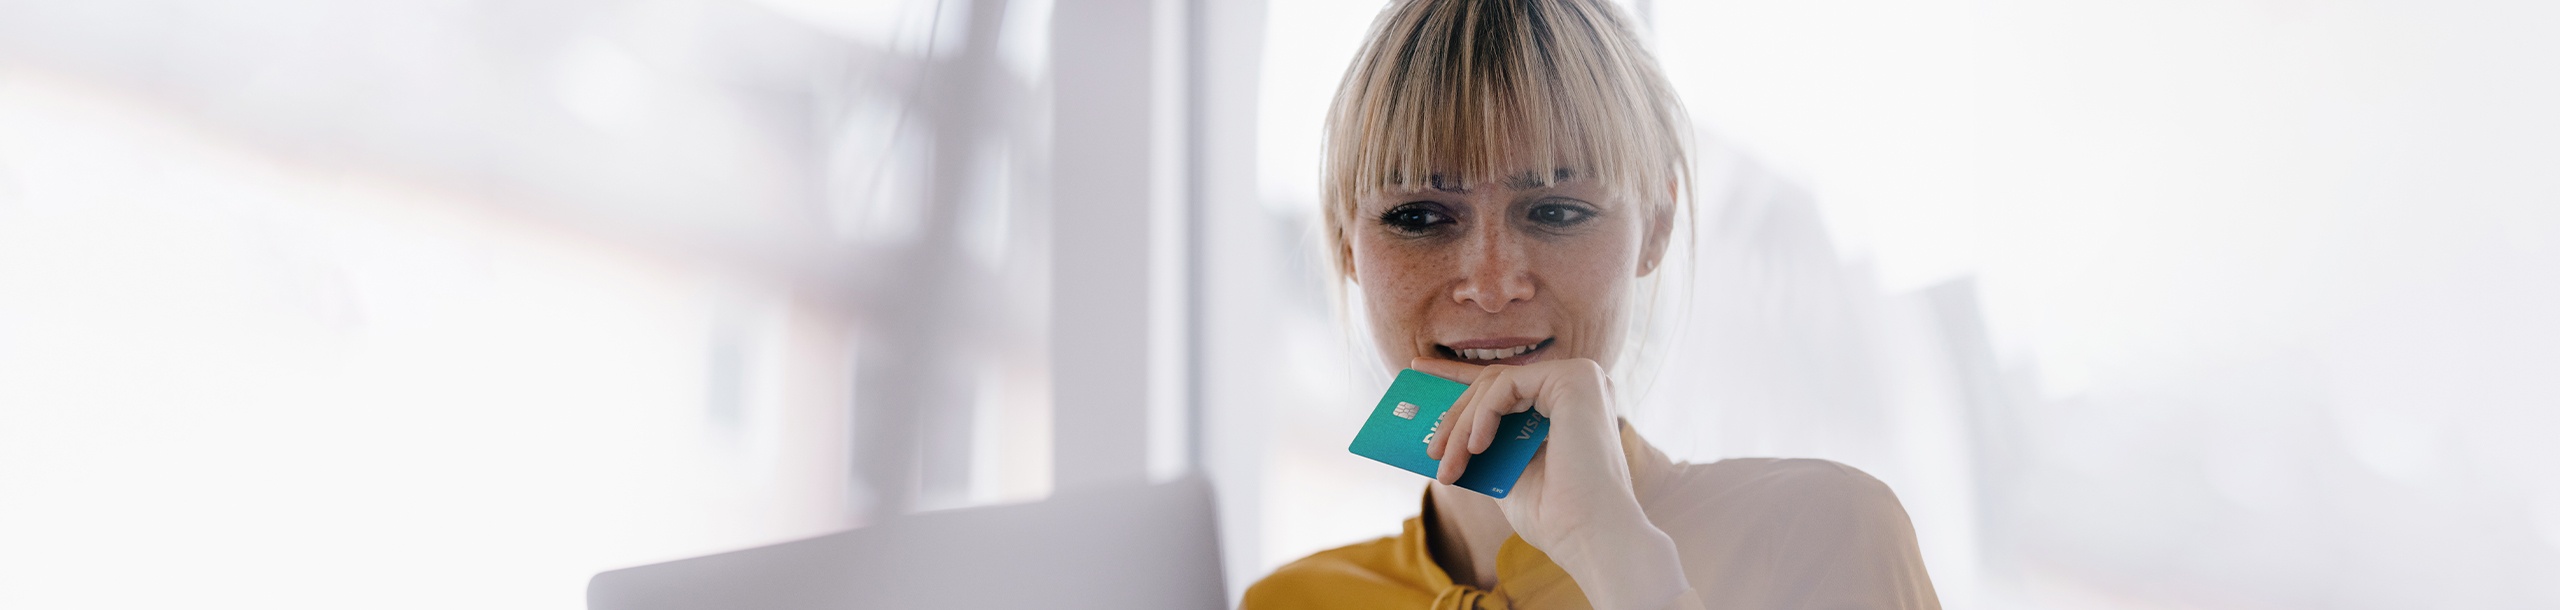 Frau hält Visa Debitkarte am Laptop sitzend